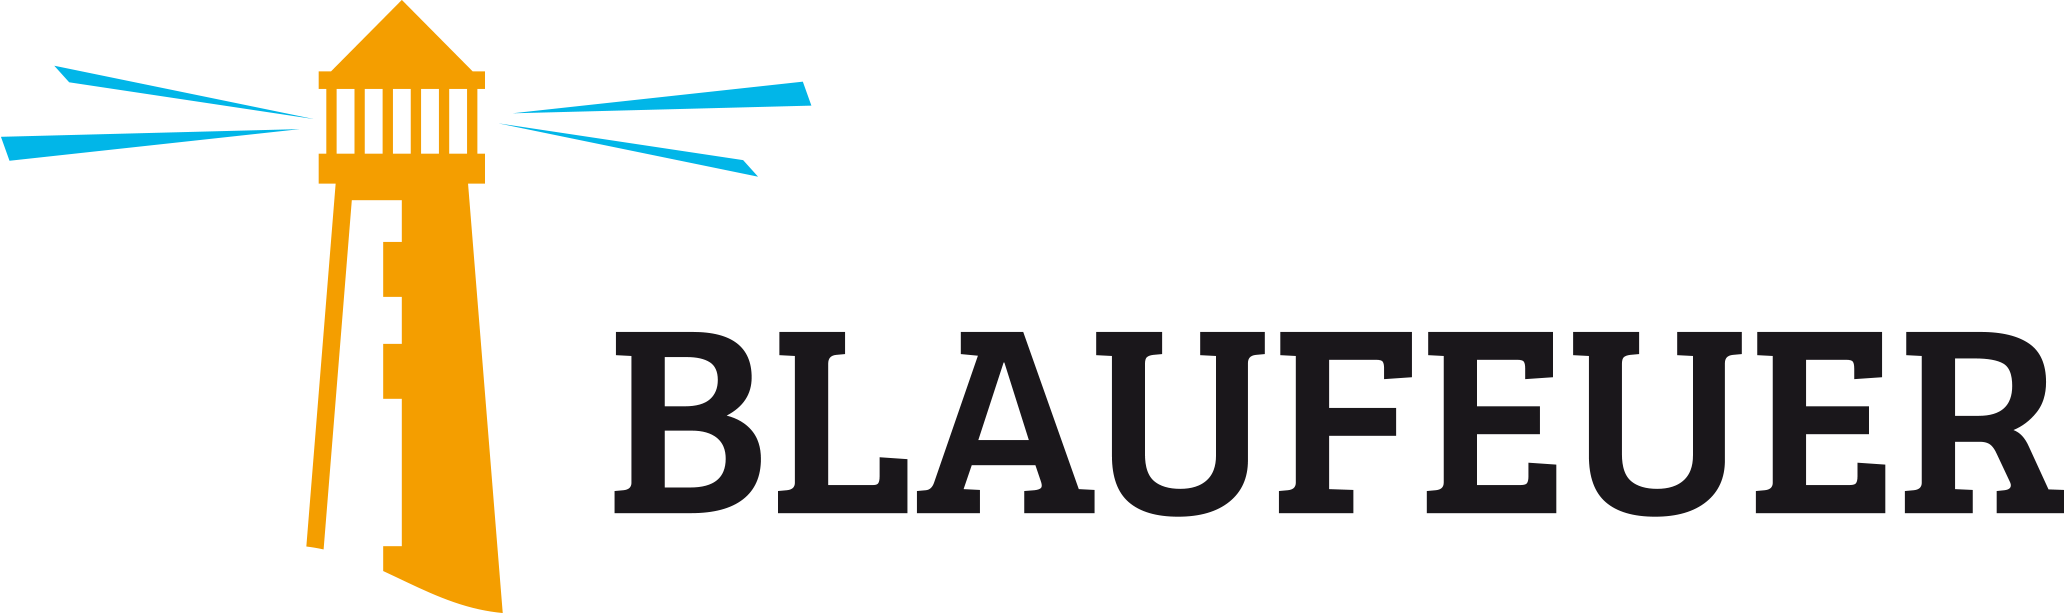 blaufeuer_logo.png